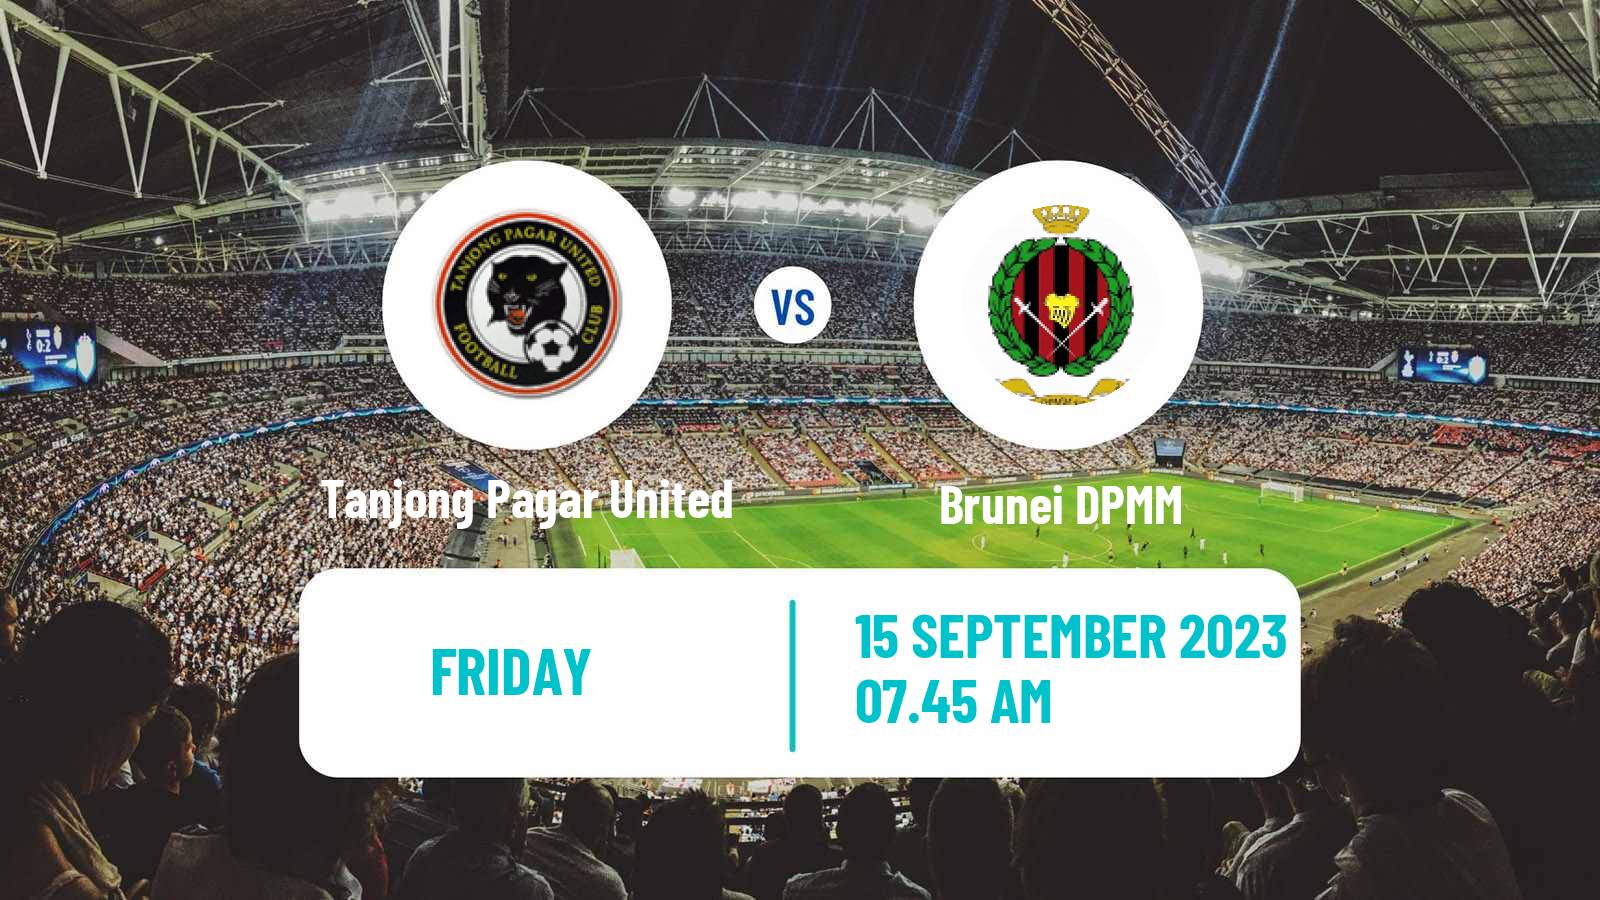 Soccer Singapore Premier League Tanjong Pagar United - Brunei DPMM